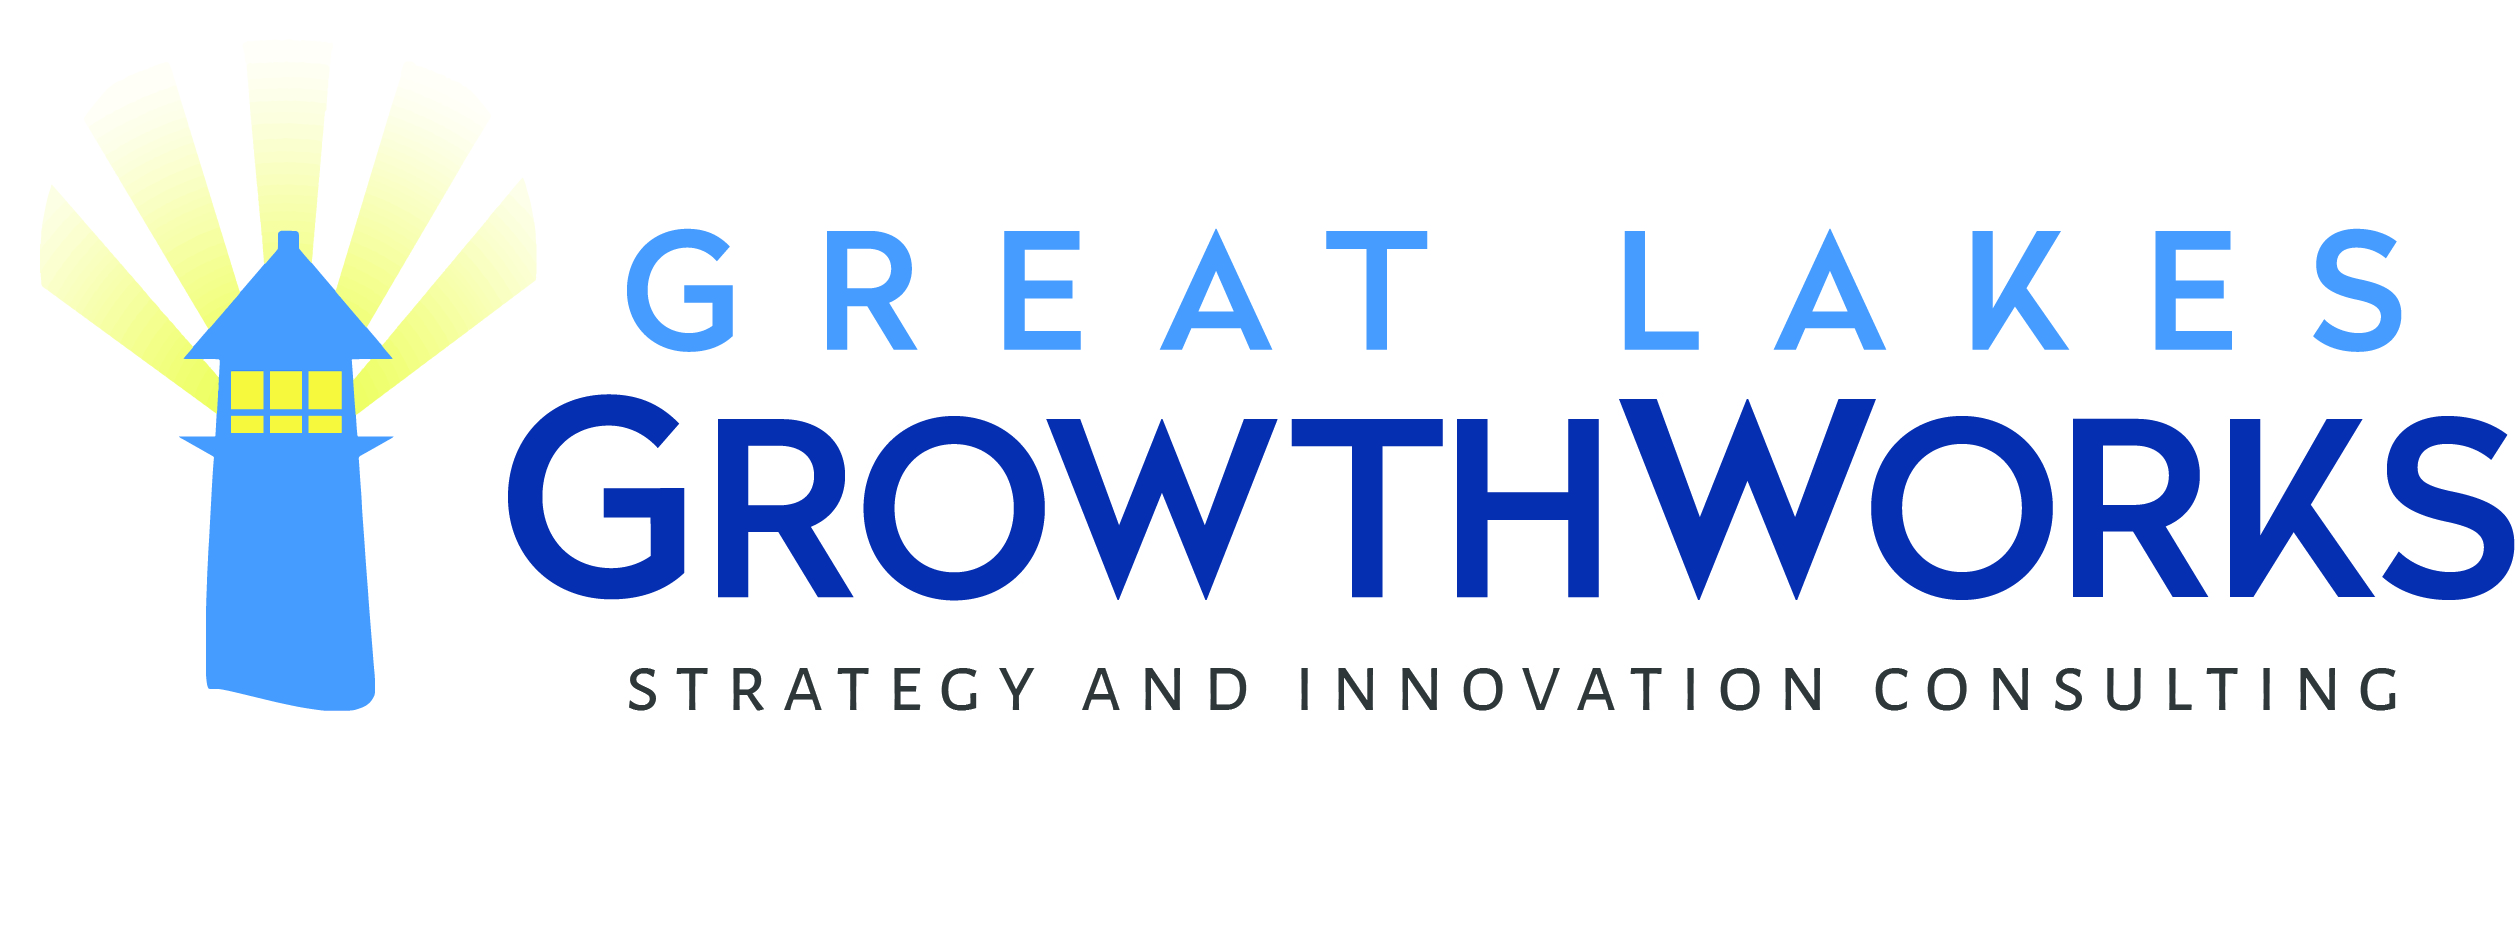 Great Lakes Growthworks logo